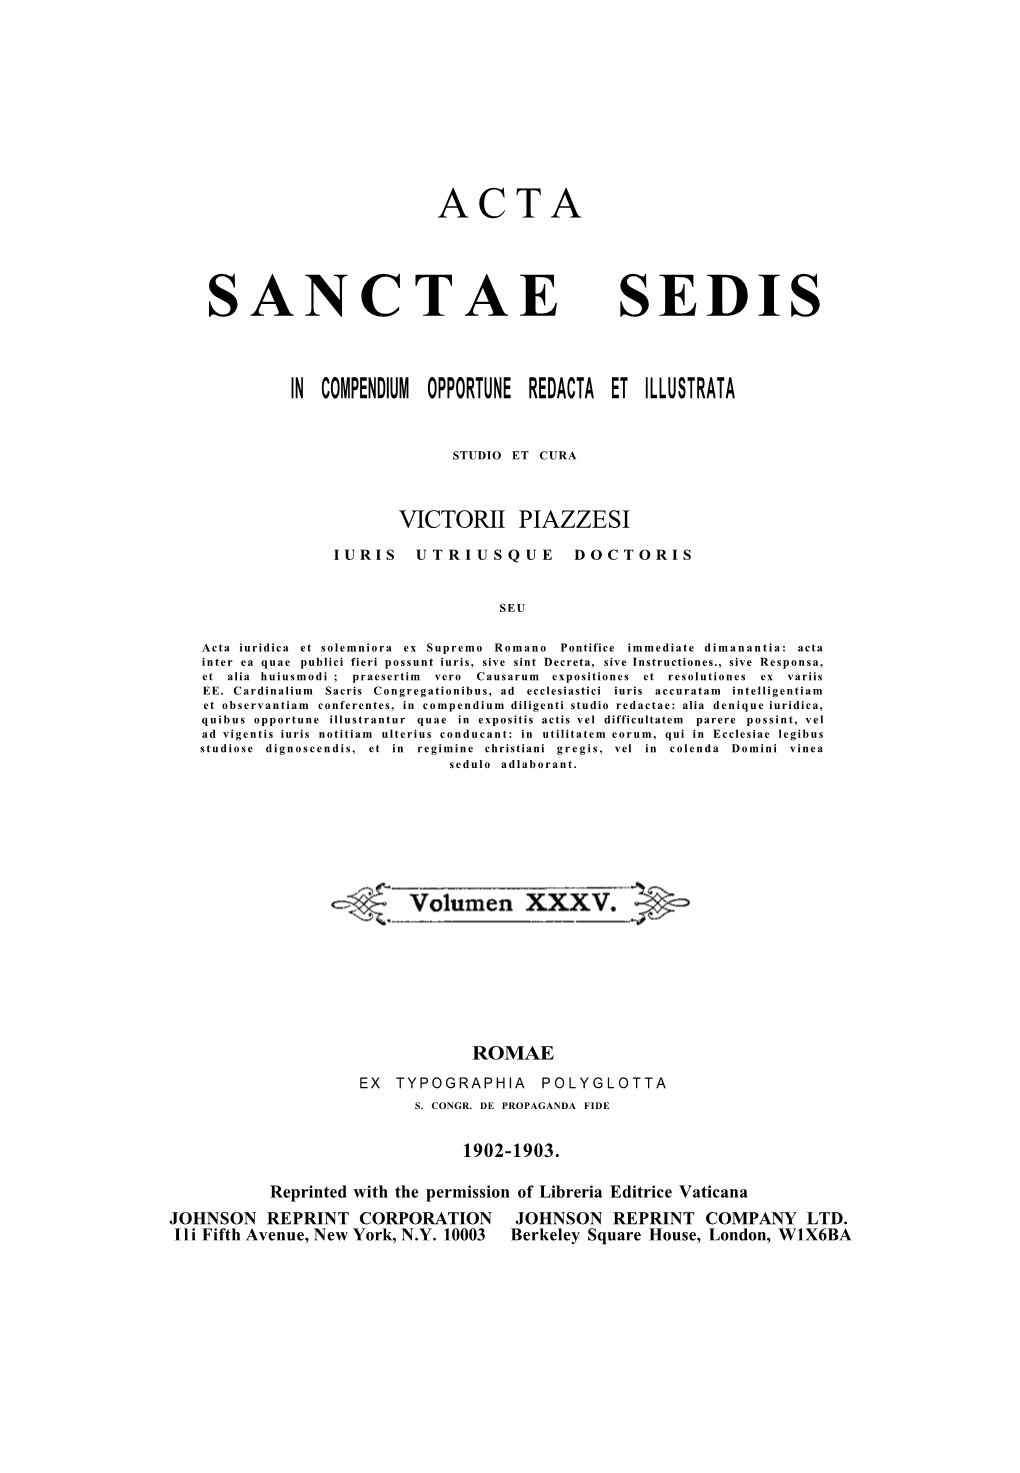 Sanctae Sedis